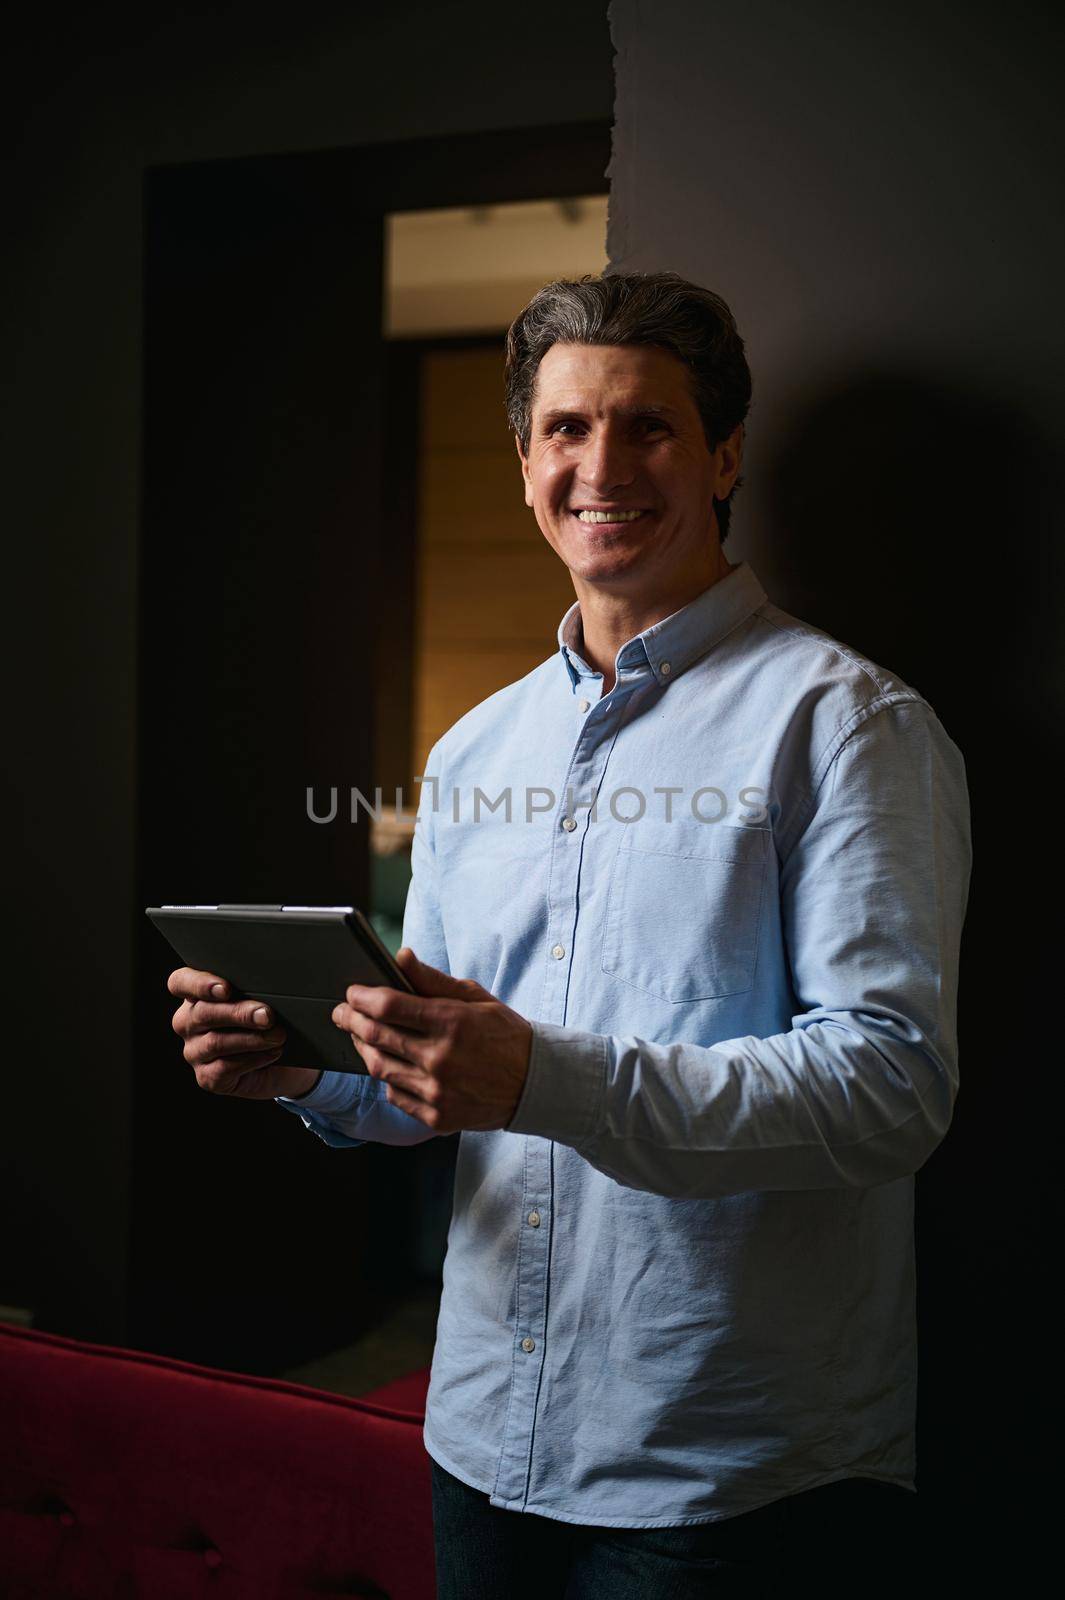 Handsome successful mature Caucasian man holds digital gadget and smiles looking at camera. Interior designer, real estate agent, entrepreneur in a furniture design showroom.